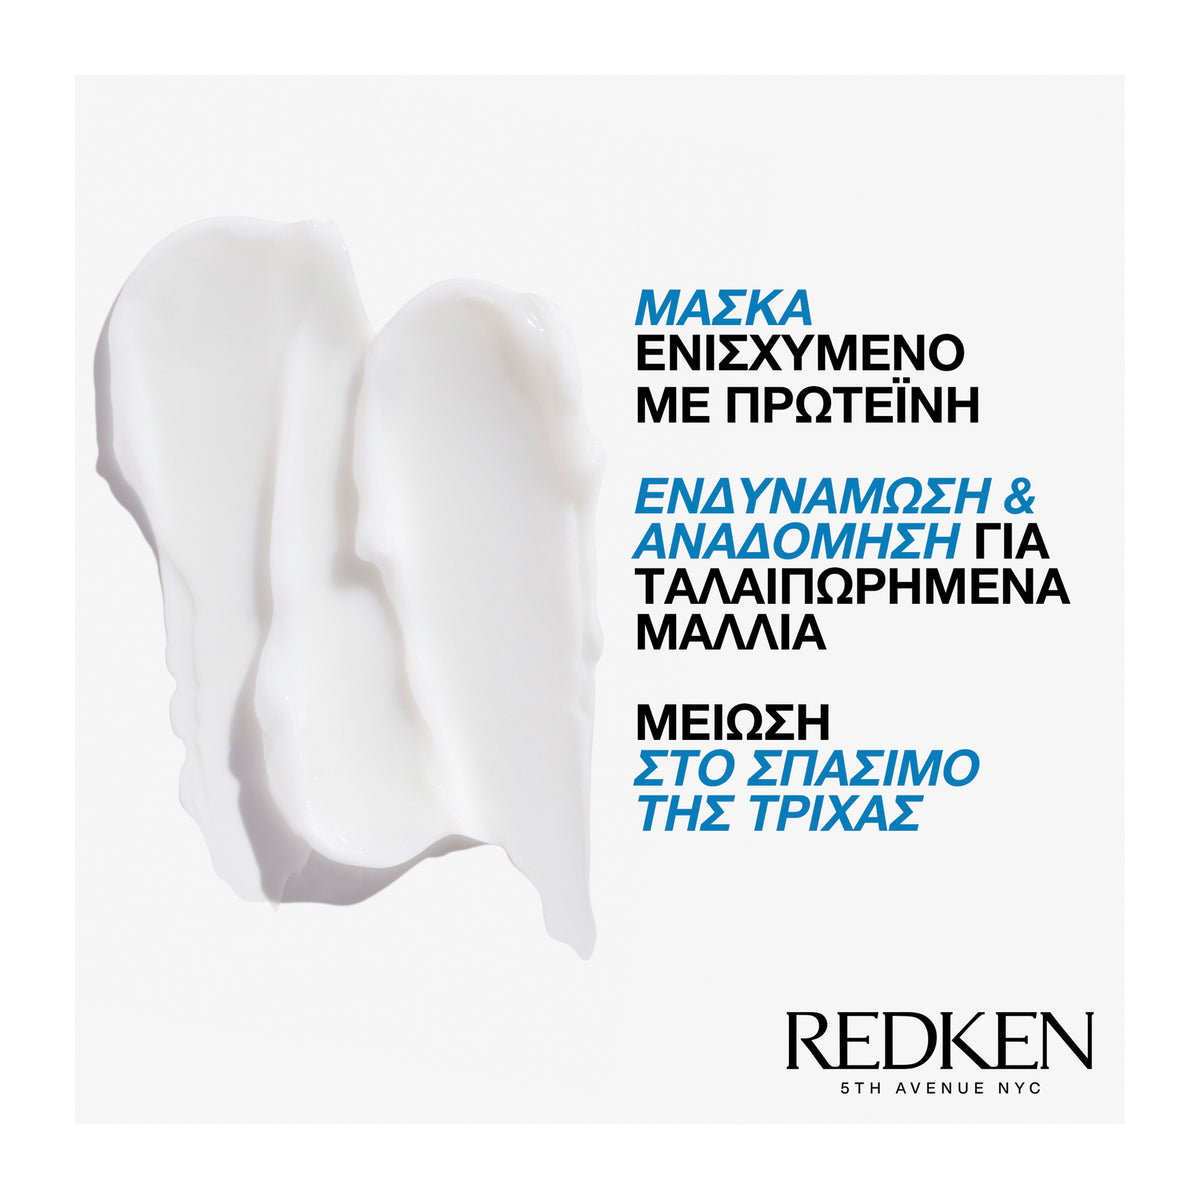 Redken Extreme Μάσκα Εντατικής Αναδόμησης Για Ταλαιπωρημένα Μαλλιά 250ml